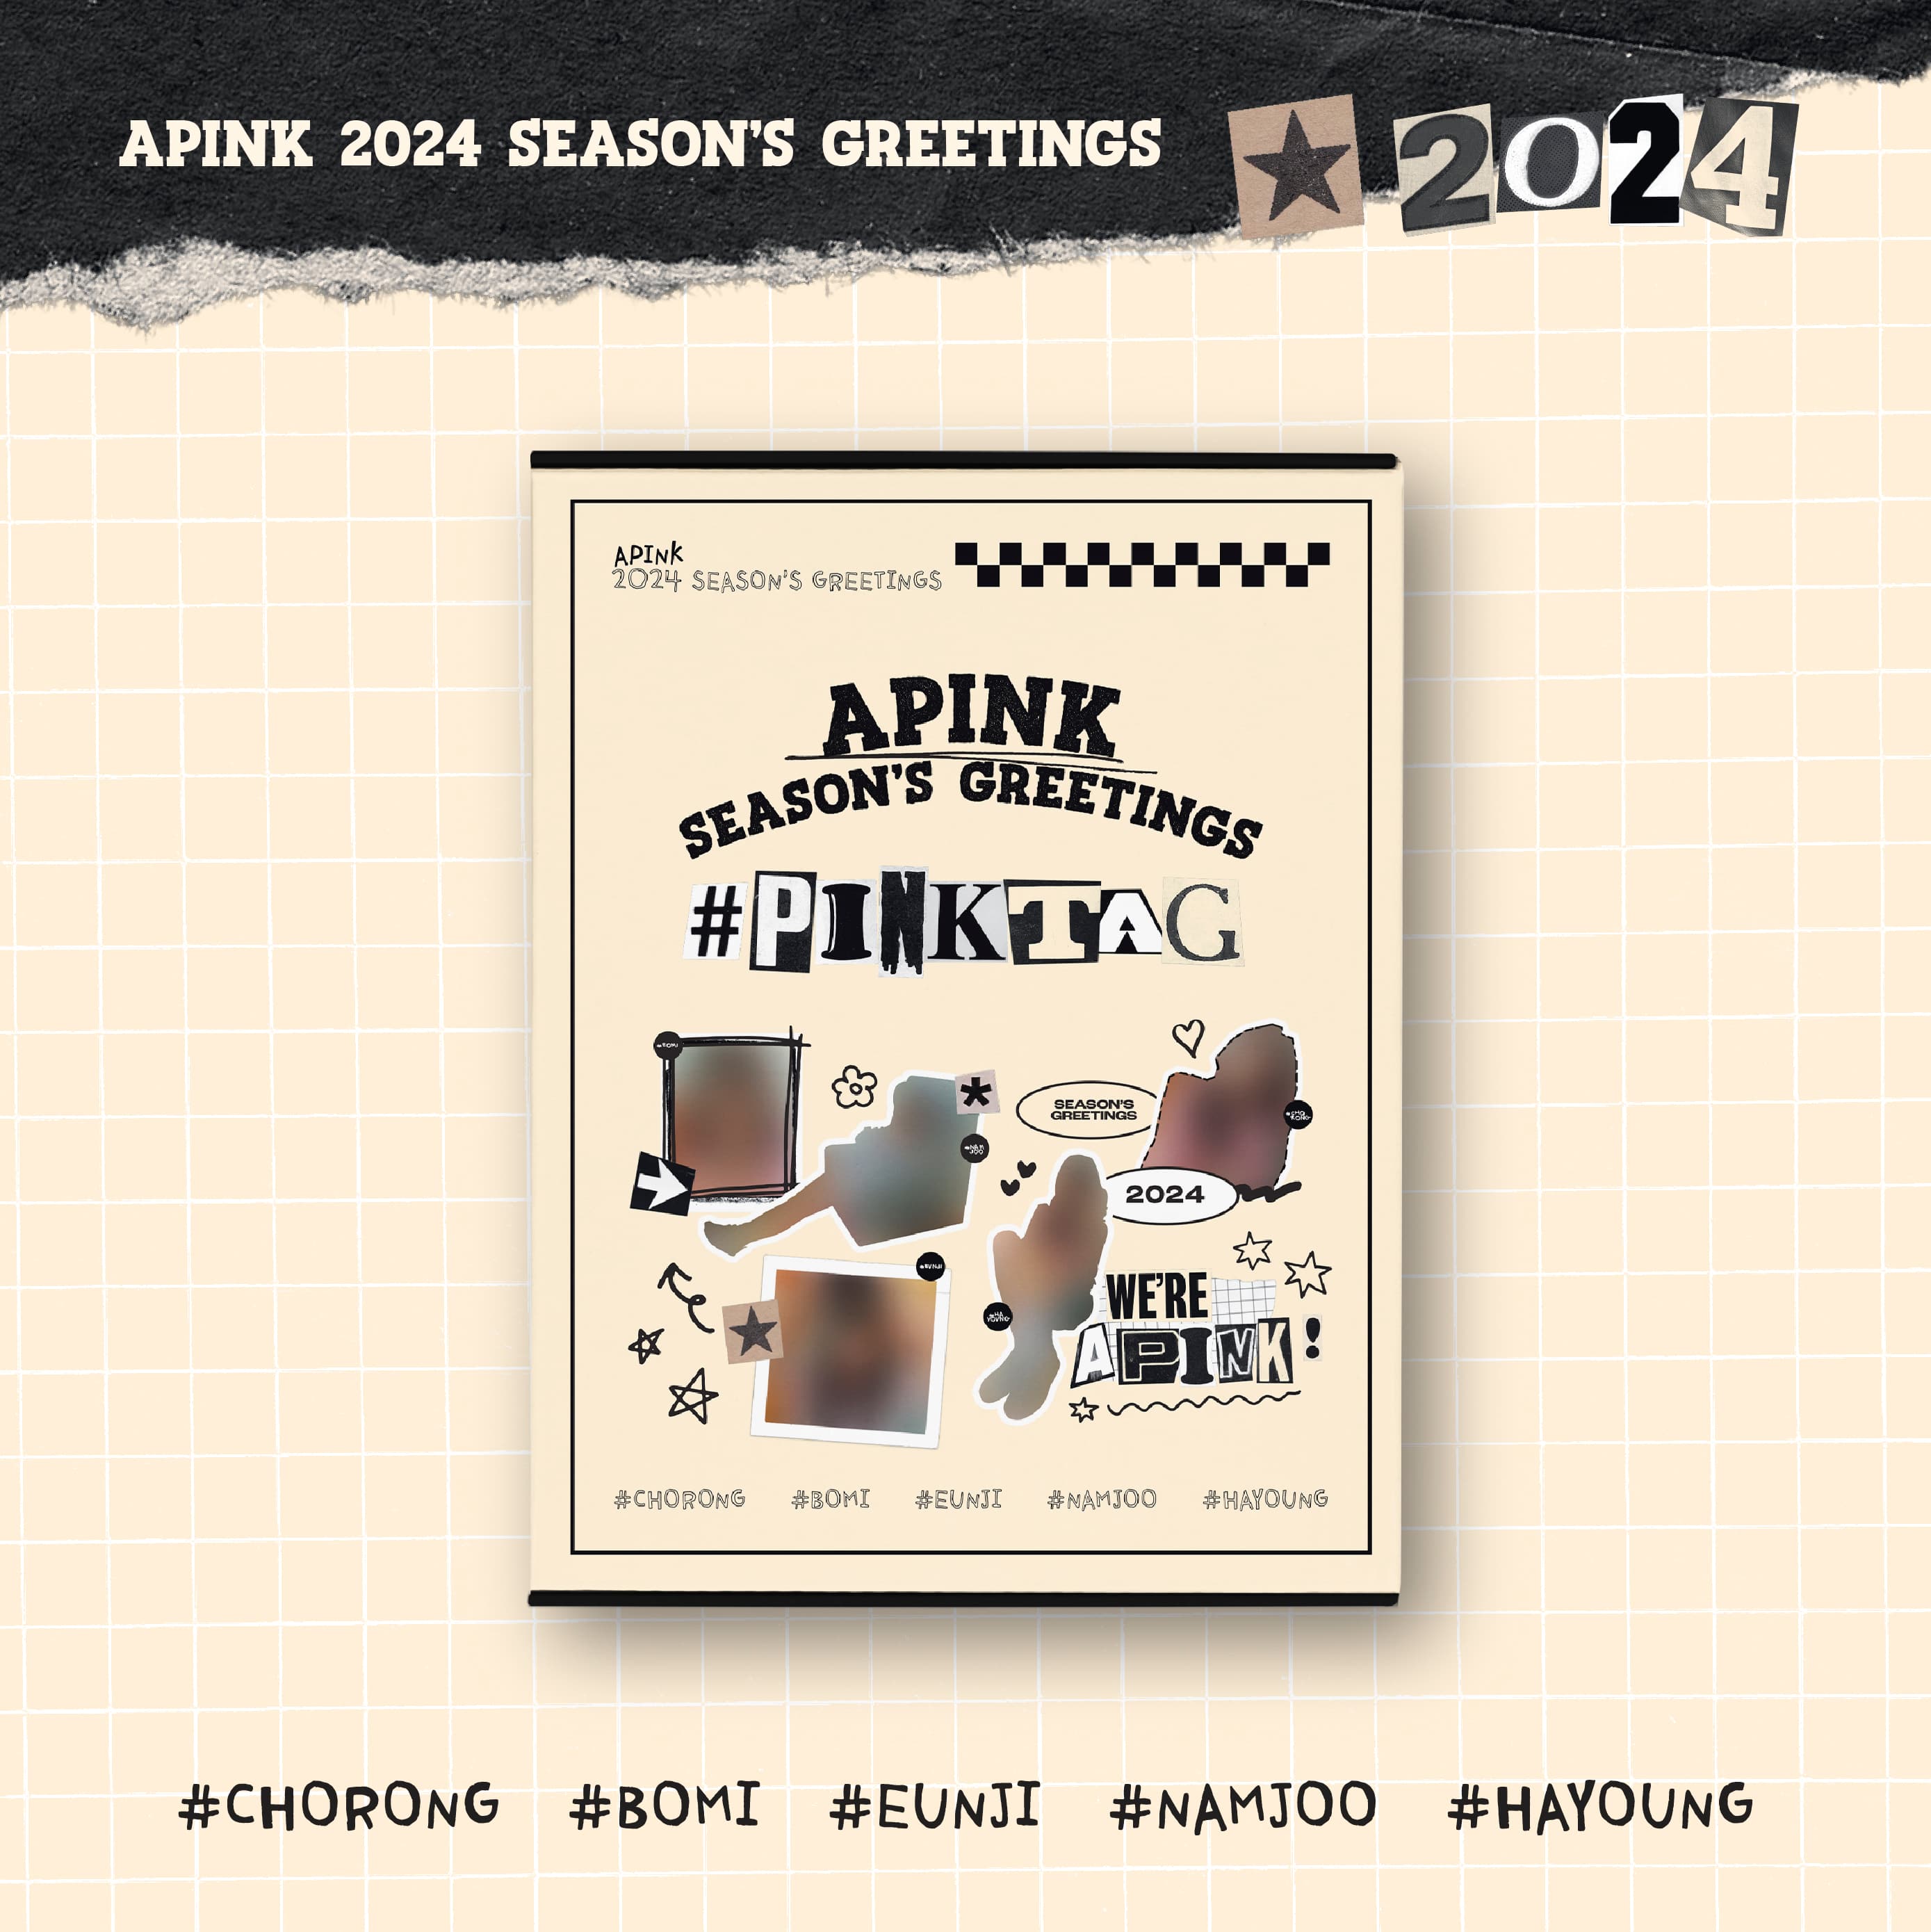 [PRE-ORDER] *fromm store GIFT* Apink - 2024 SEASON'S GREETINGS #PINKTAG